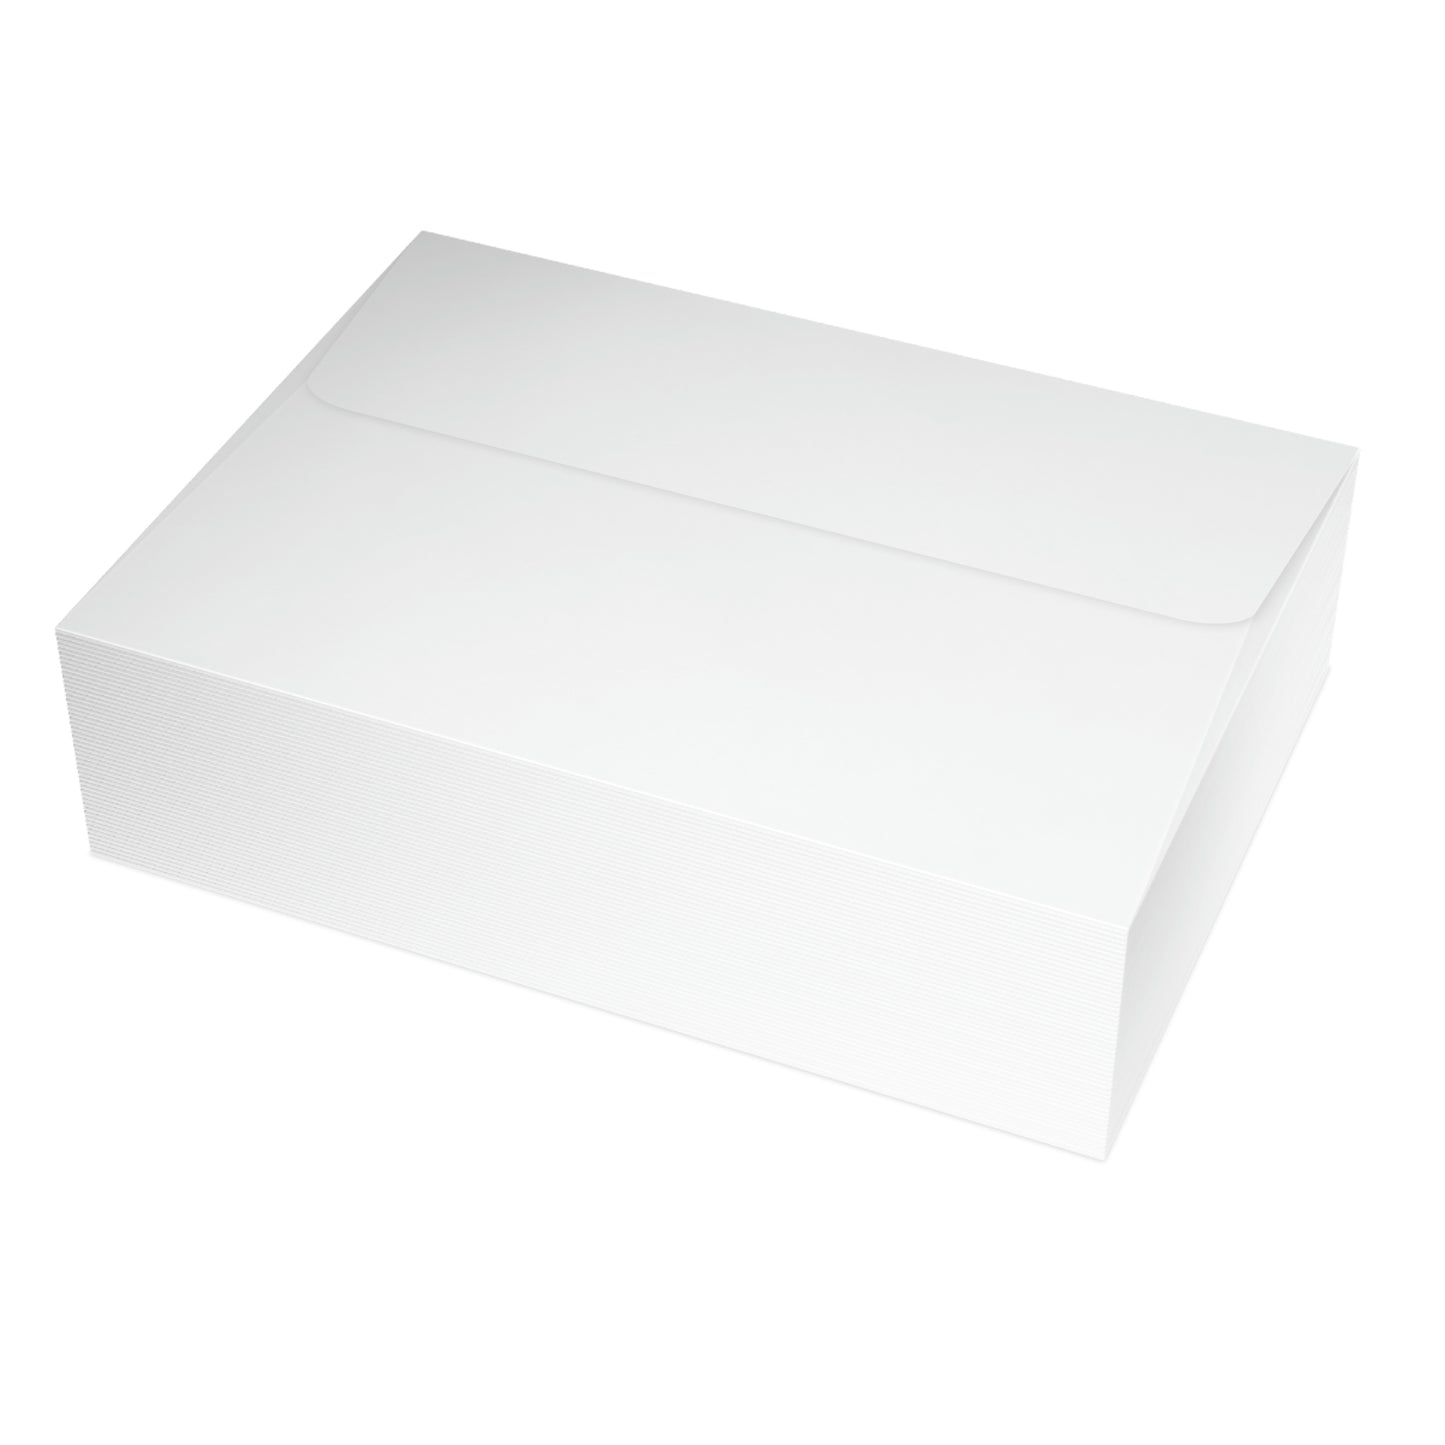 Folded Greeting Cards Horizontal (1, 10, 30, and 50pcs) Calm Down - Design No.100